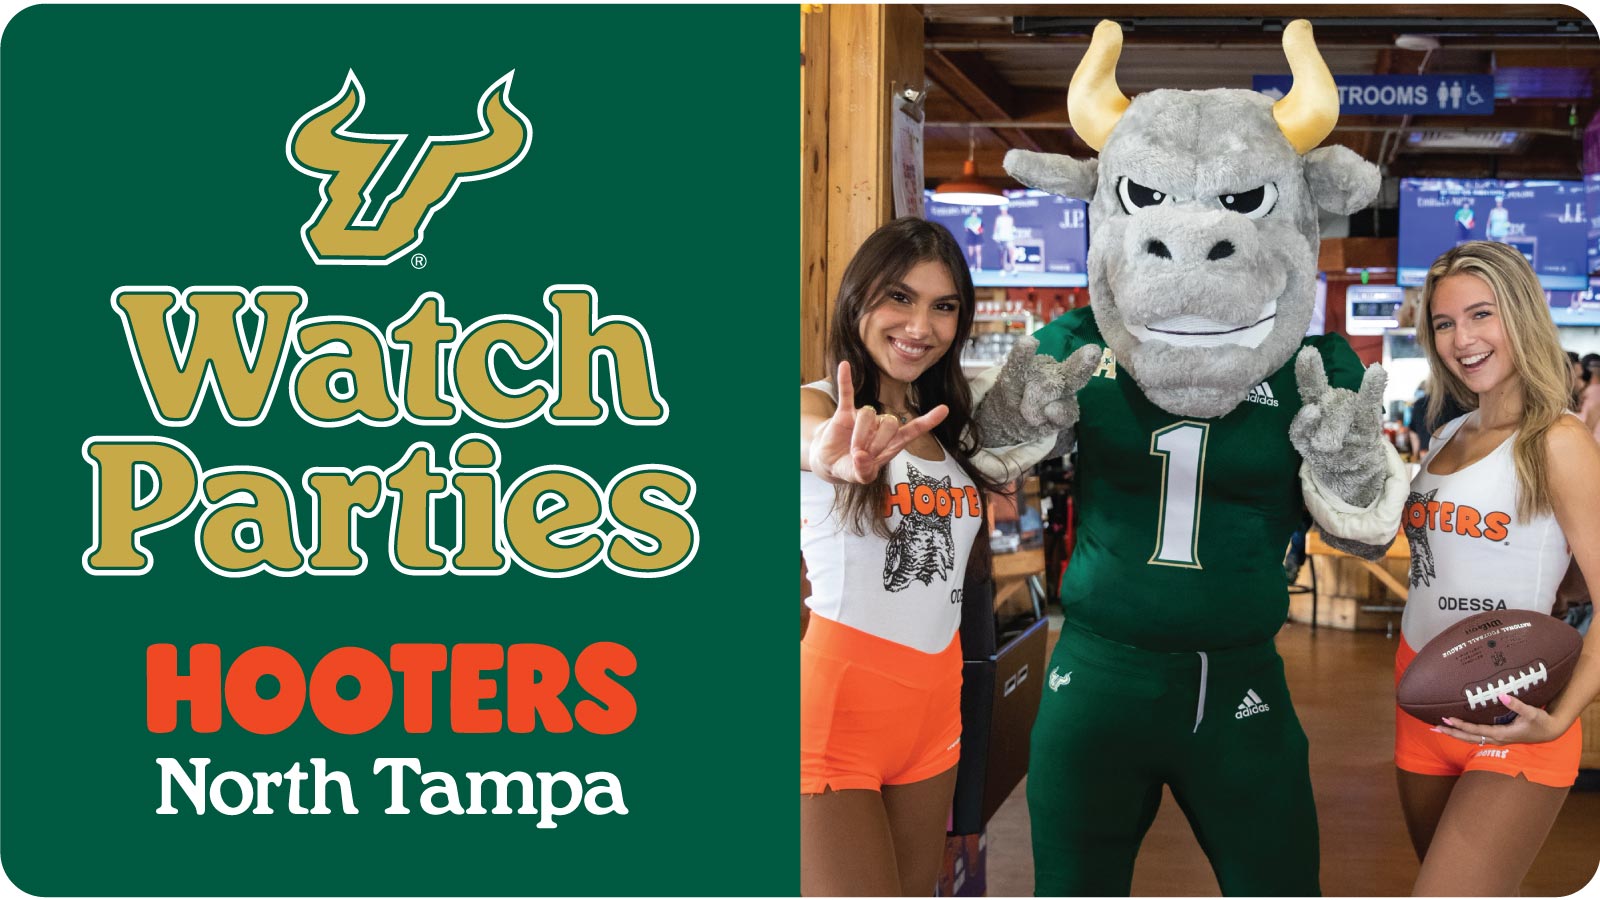 USF Bulls Watch Parties at North Tampa Hooters